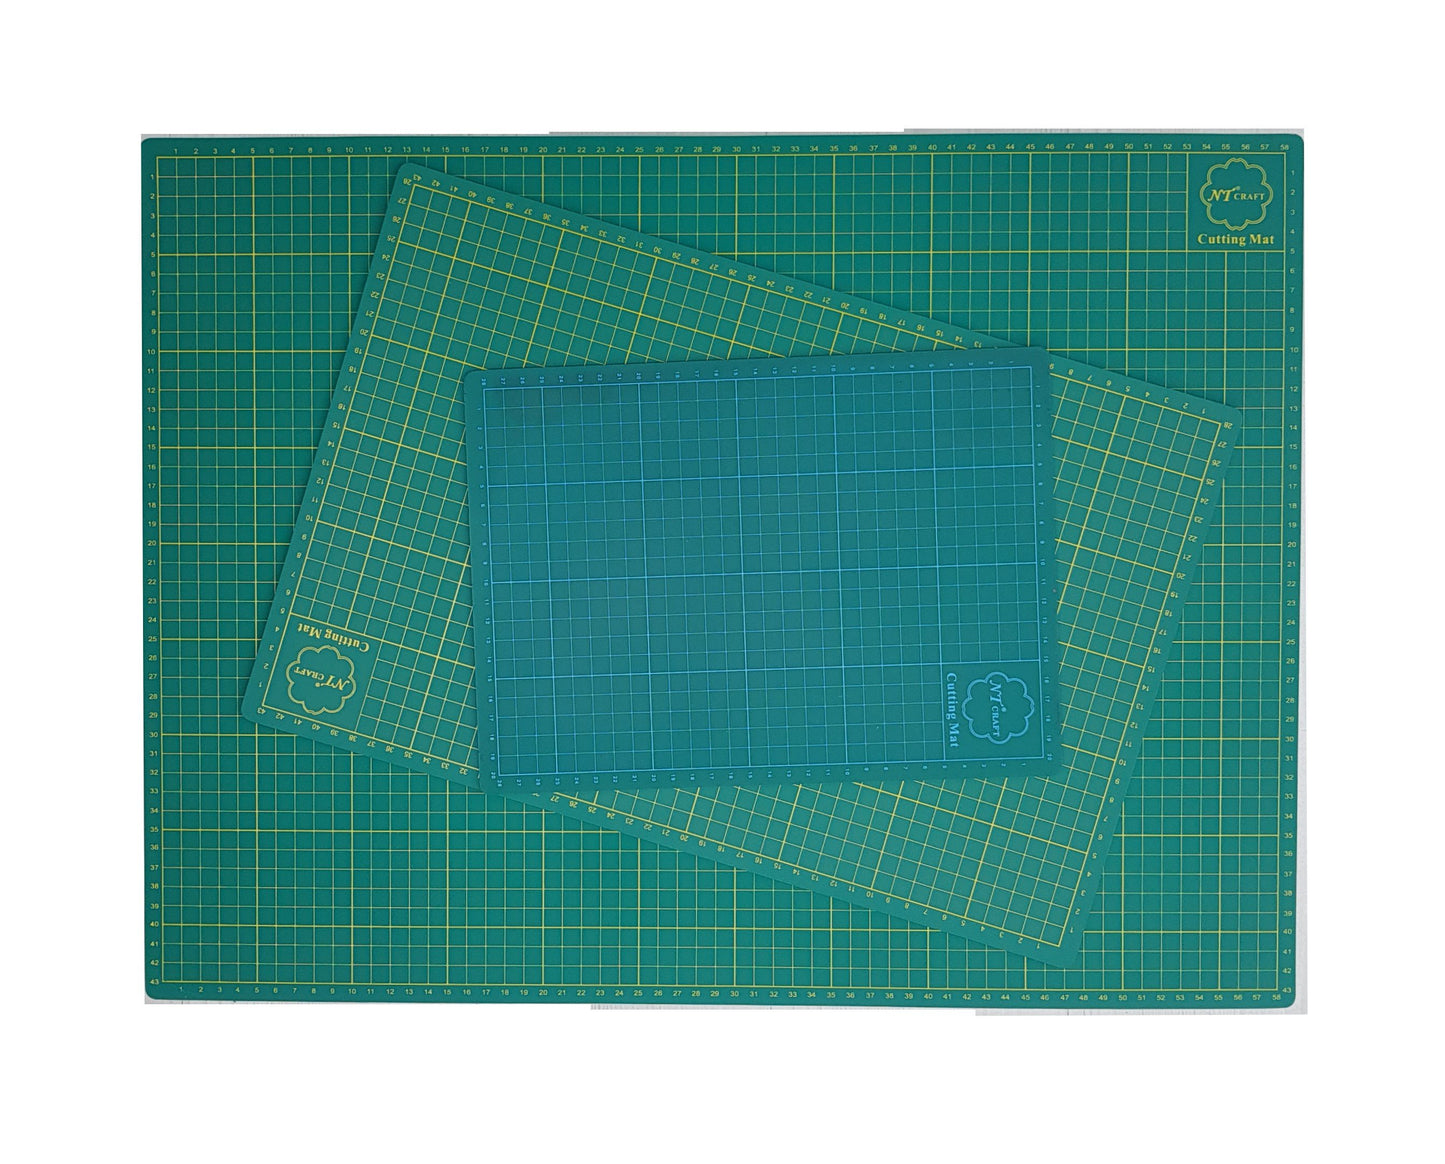 Cutting Mat - Cutting Mat - Cutting Table (A2) (60cm by 45cm wide)